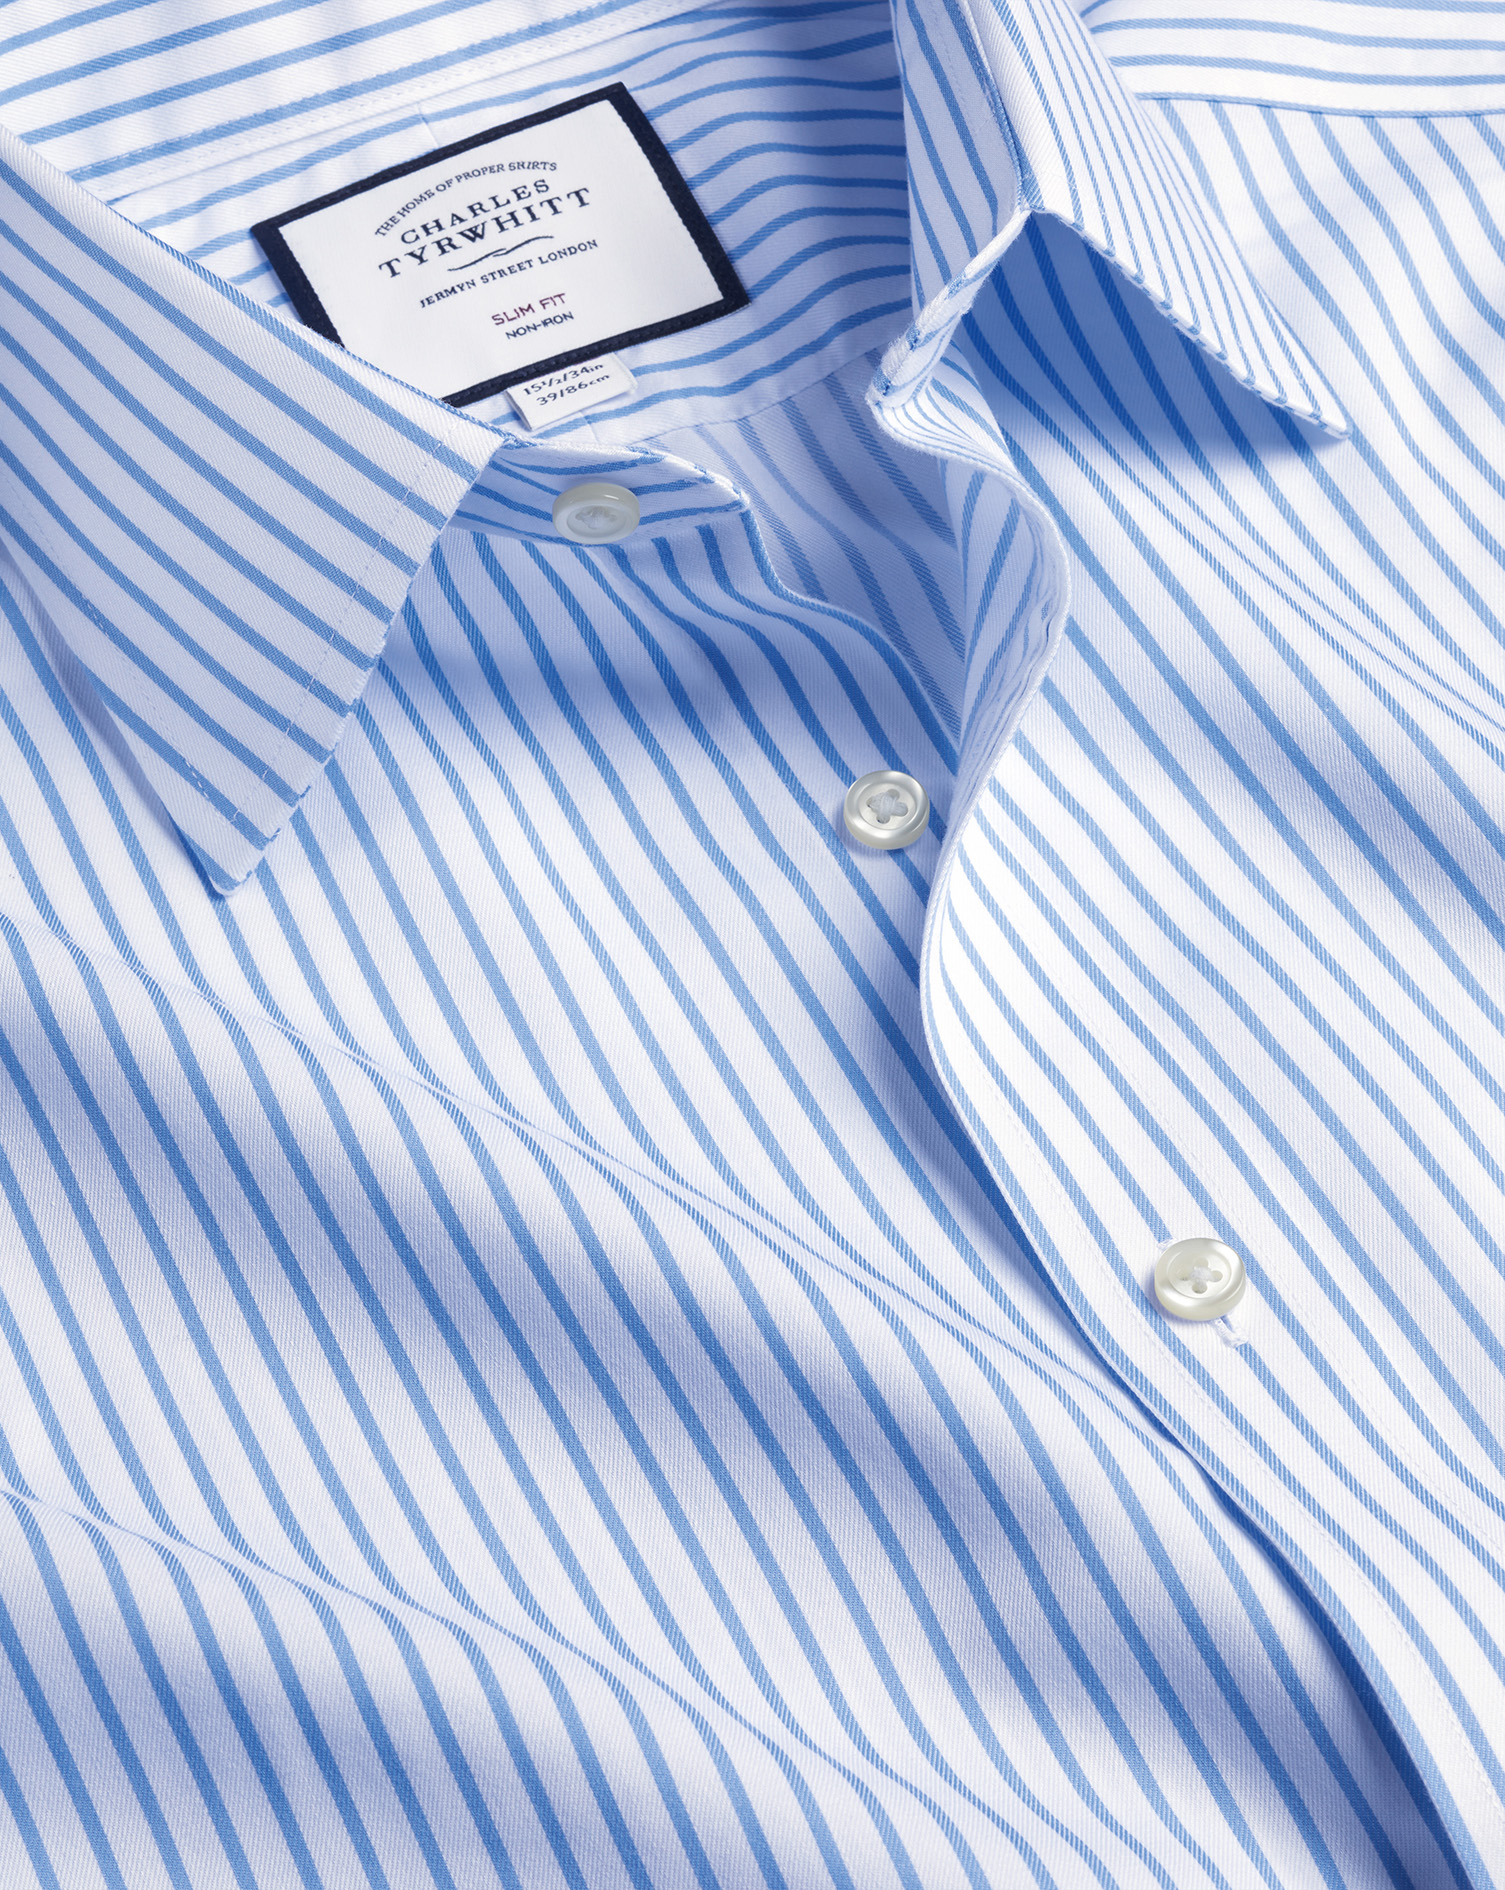 Men's Charles Tyrwhitt Non-Iron Twill Stripe Dress Shirt - Cornflower Blue Single Cuff Size Large Co